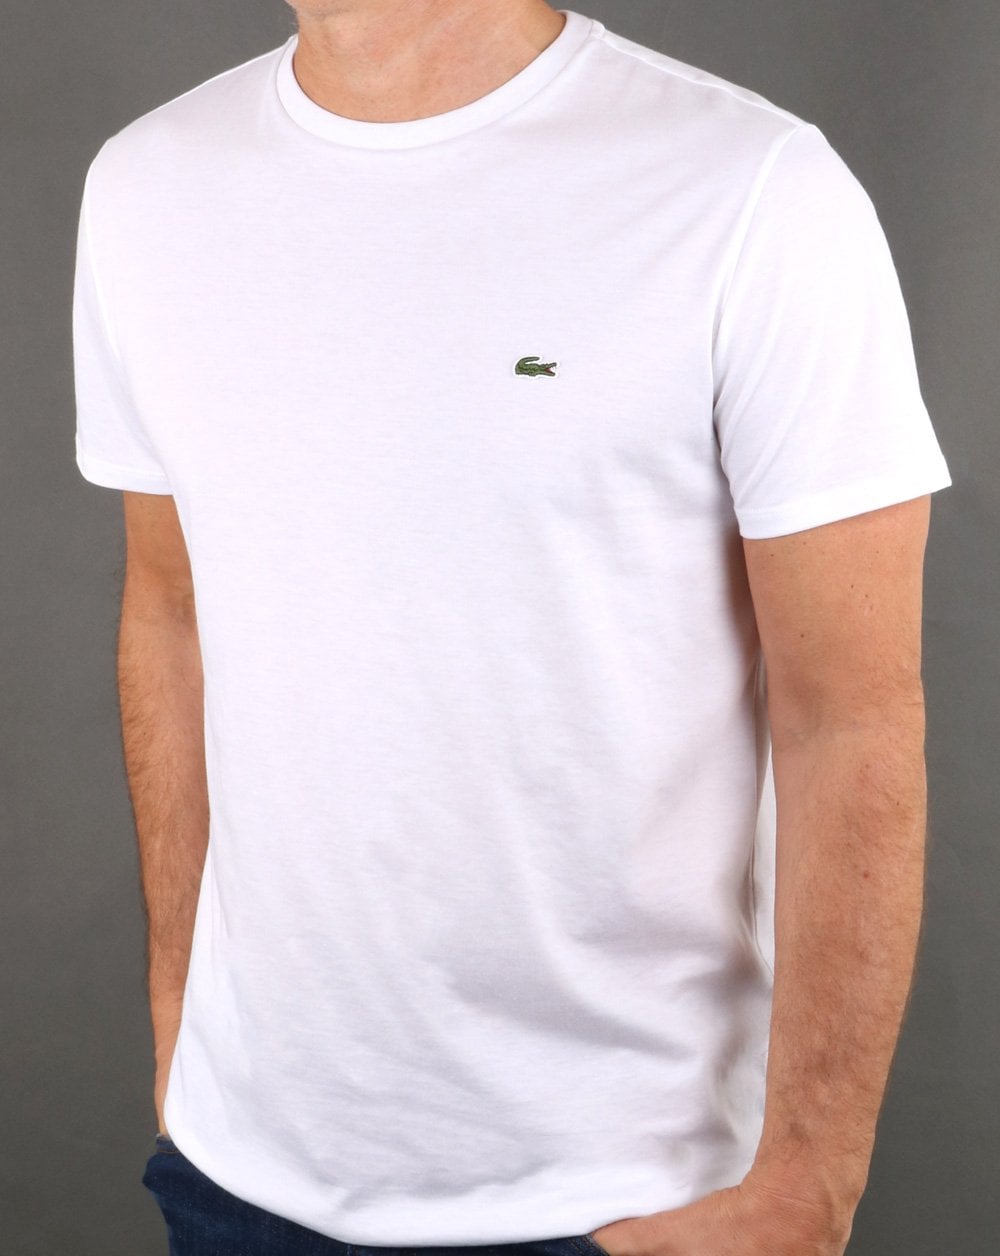 Lcste Premium Imported Cotton T Shirt – White